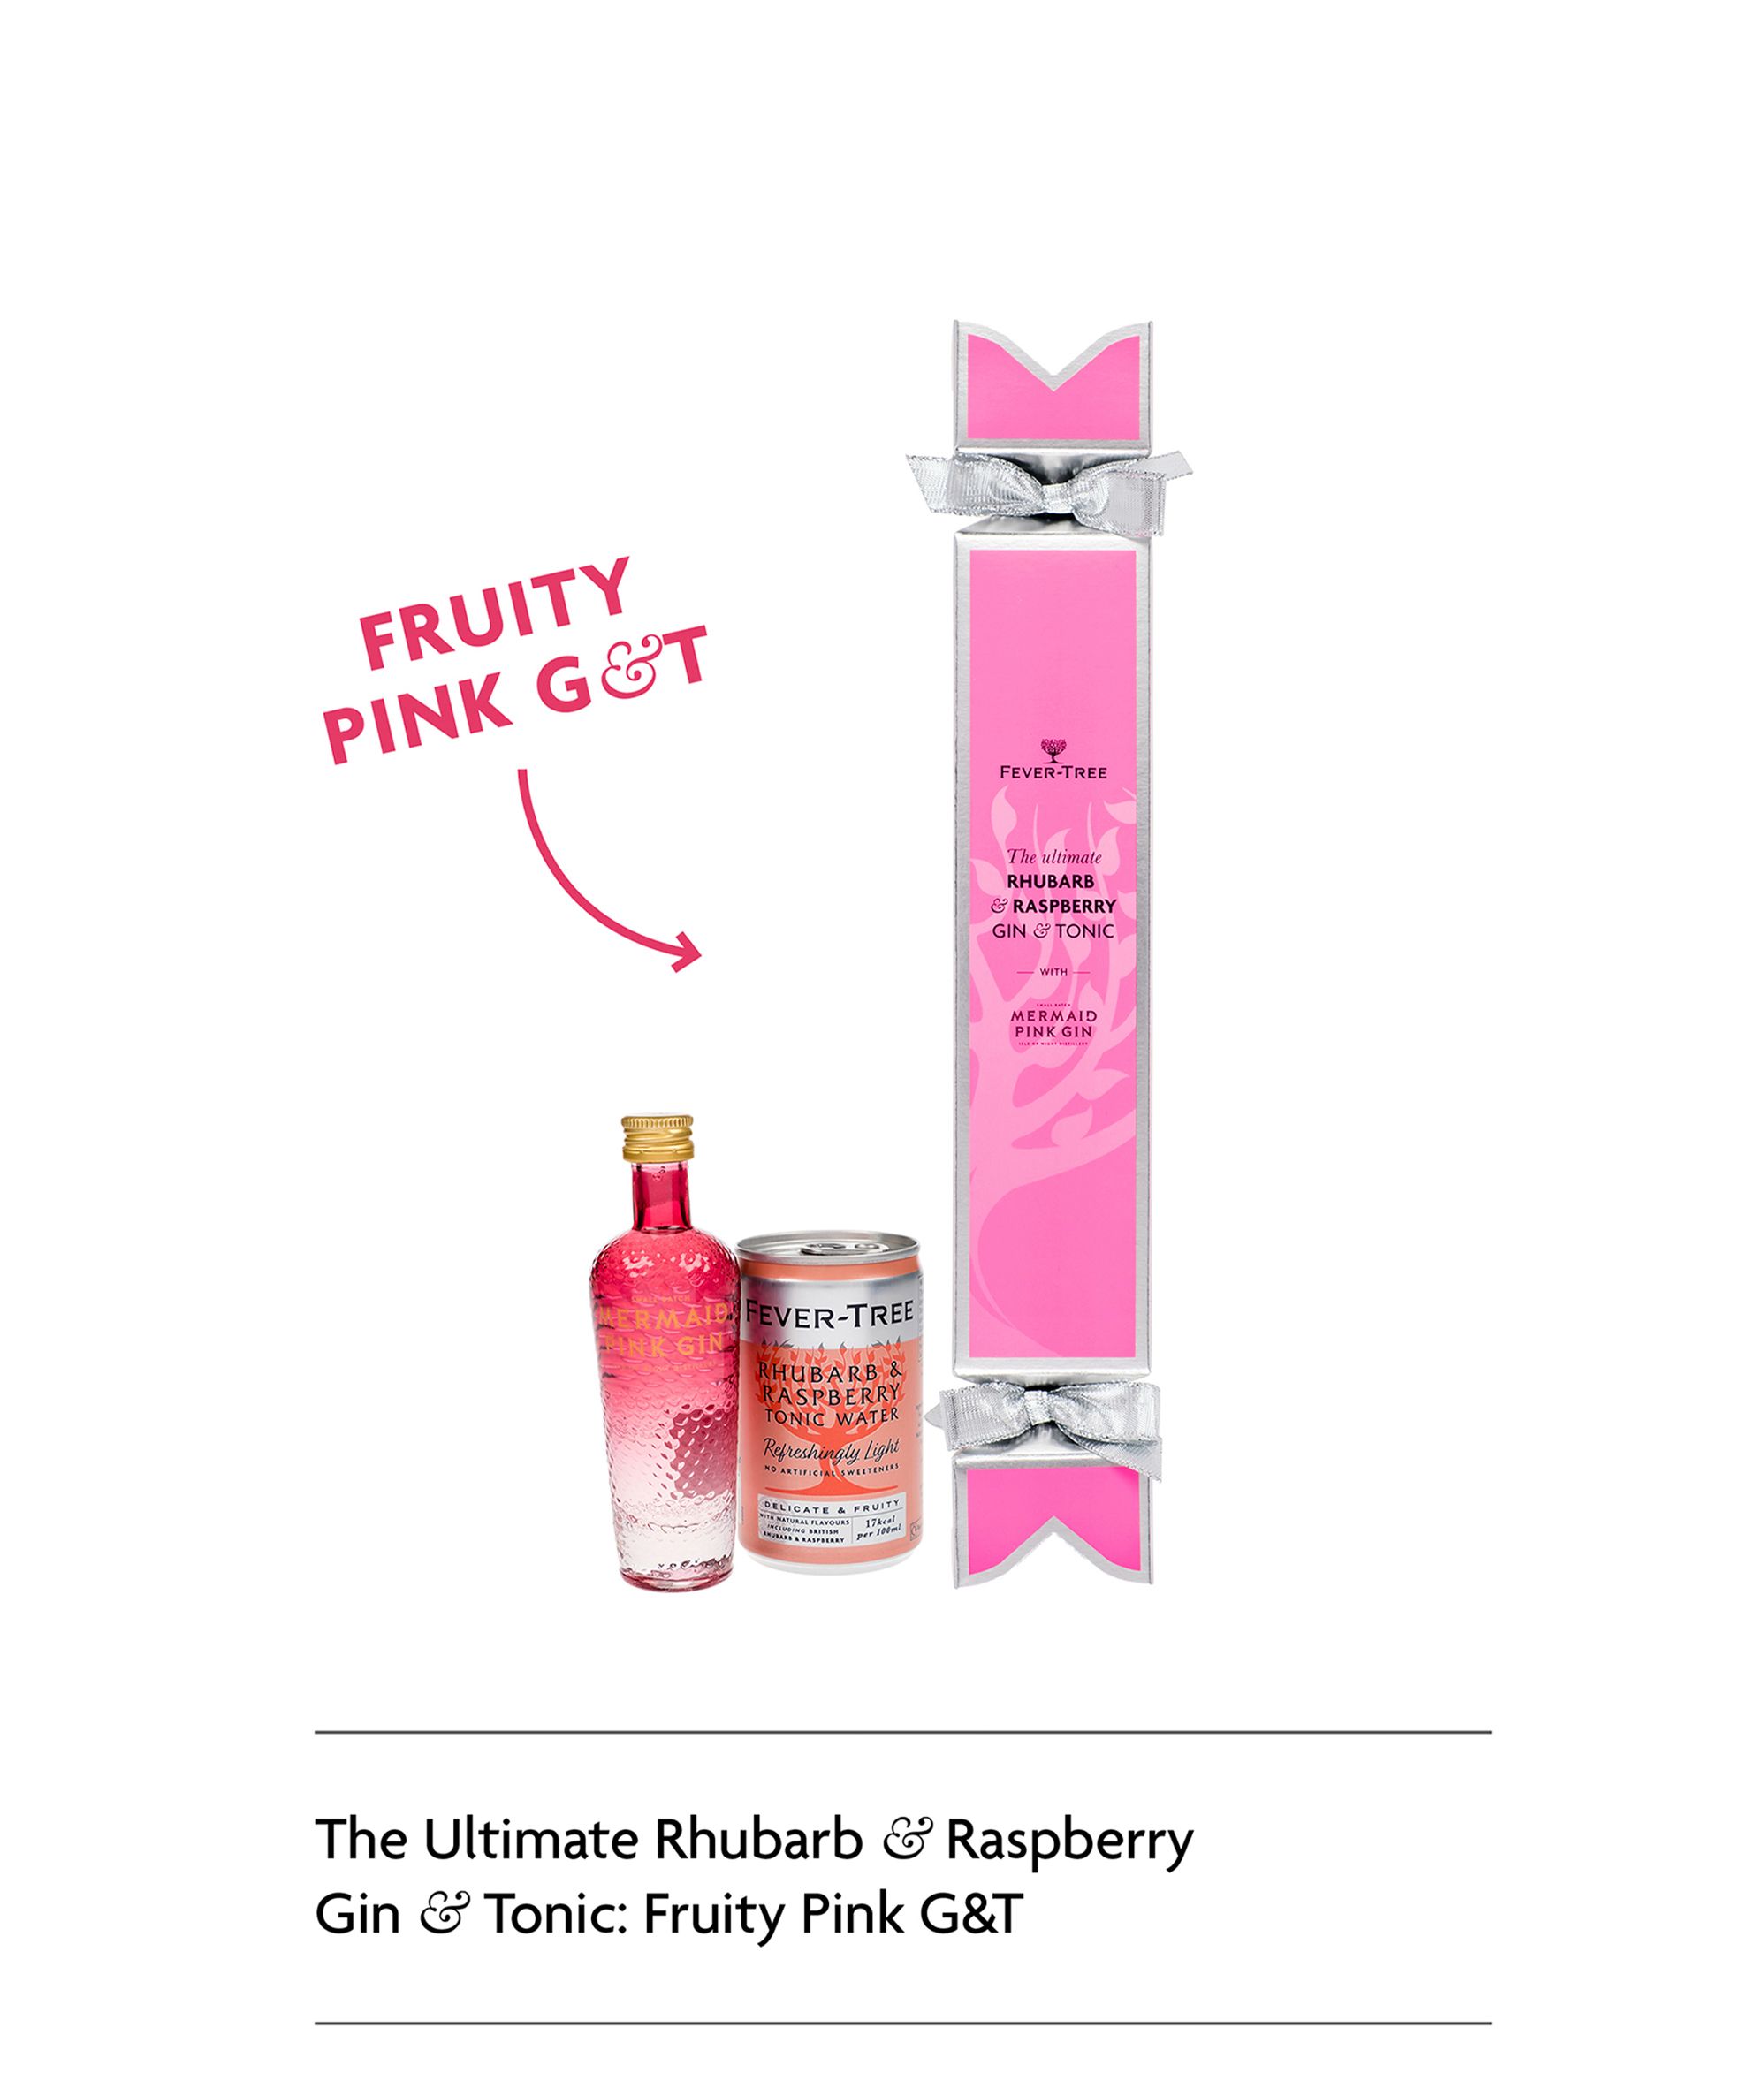 Fever Tree Rhubarb & Rasberry Gin & Tonic: Fruity Pink G&T